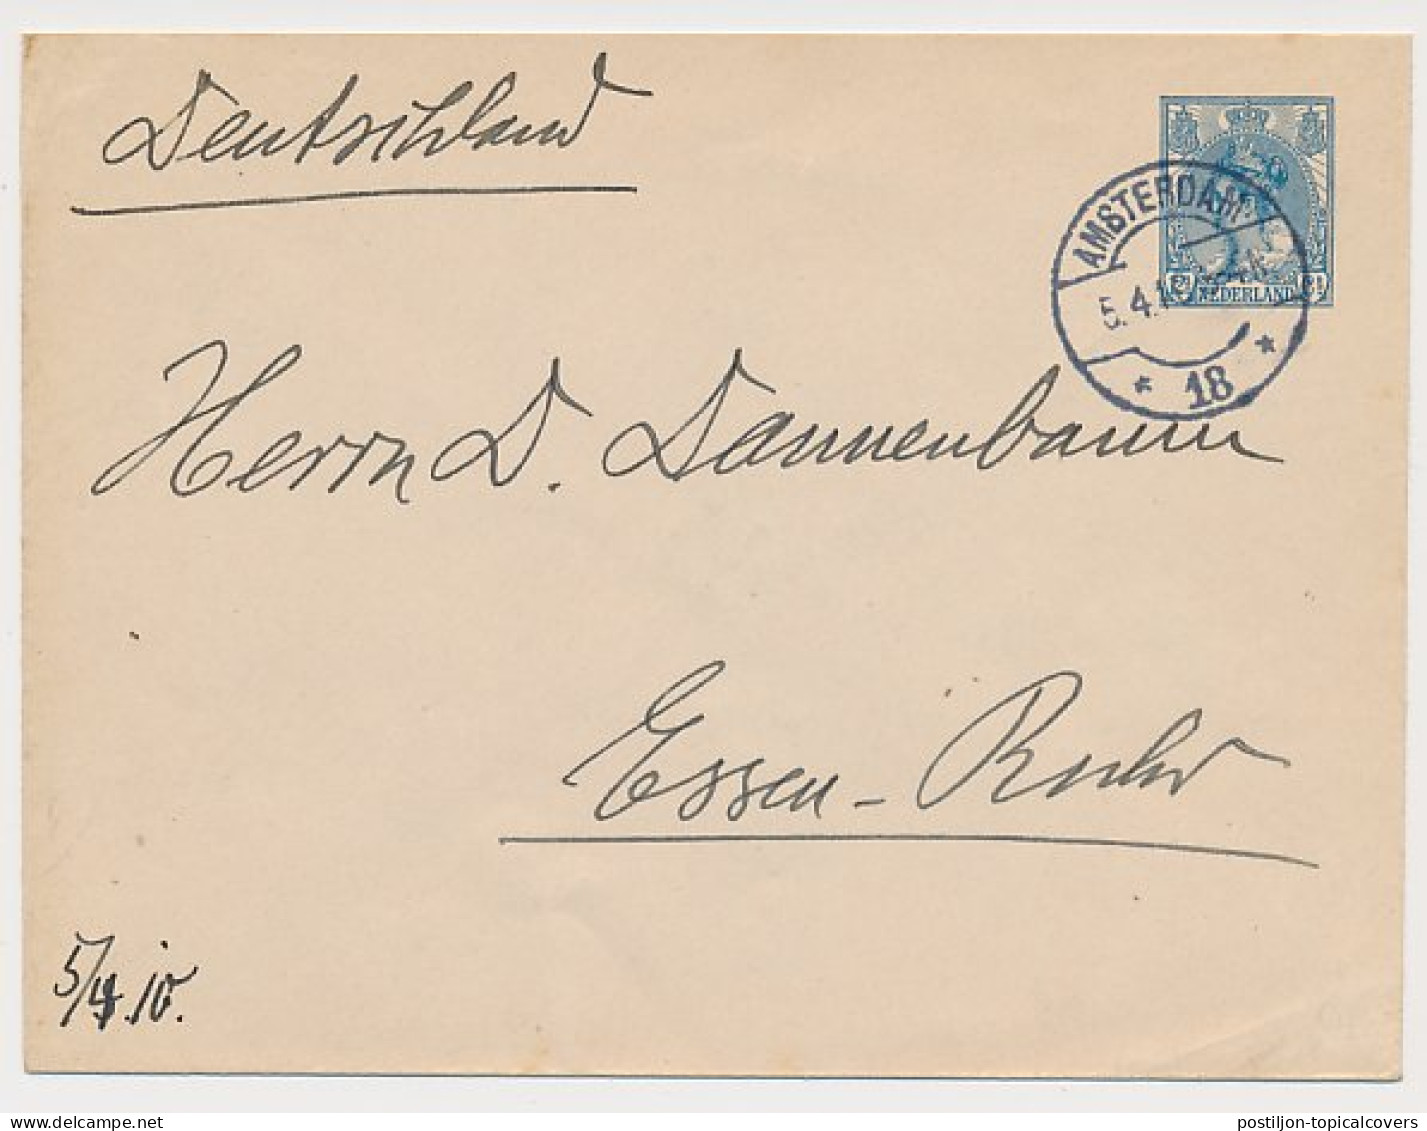 Envelop G. 15 Amsterdam - Duitsland 1910 V.b.d. - Ganzsachen